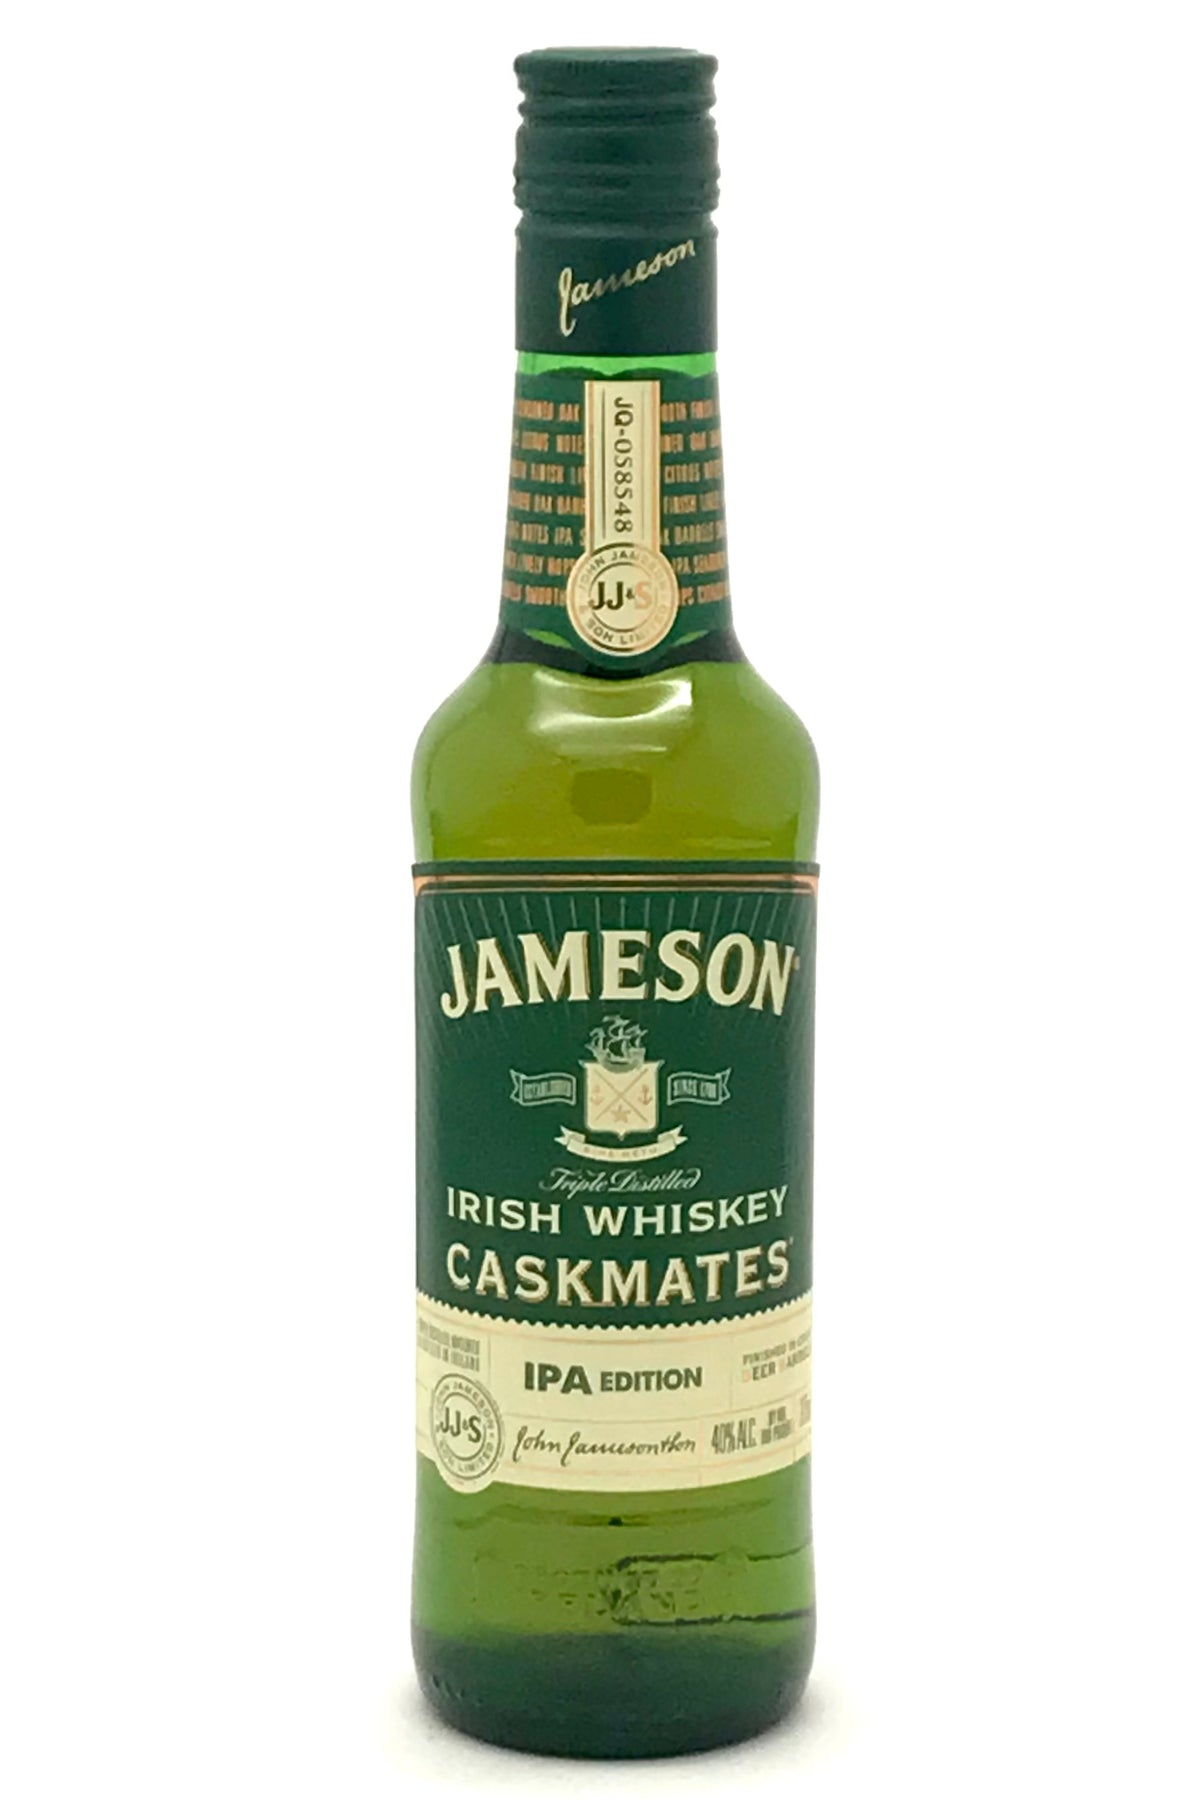 Jameson Caskmates IPA Edition Irish Whiskey 375 ml